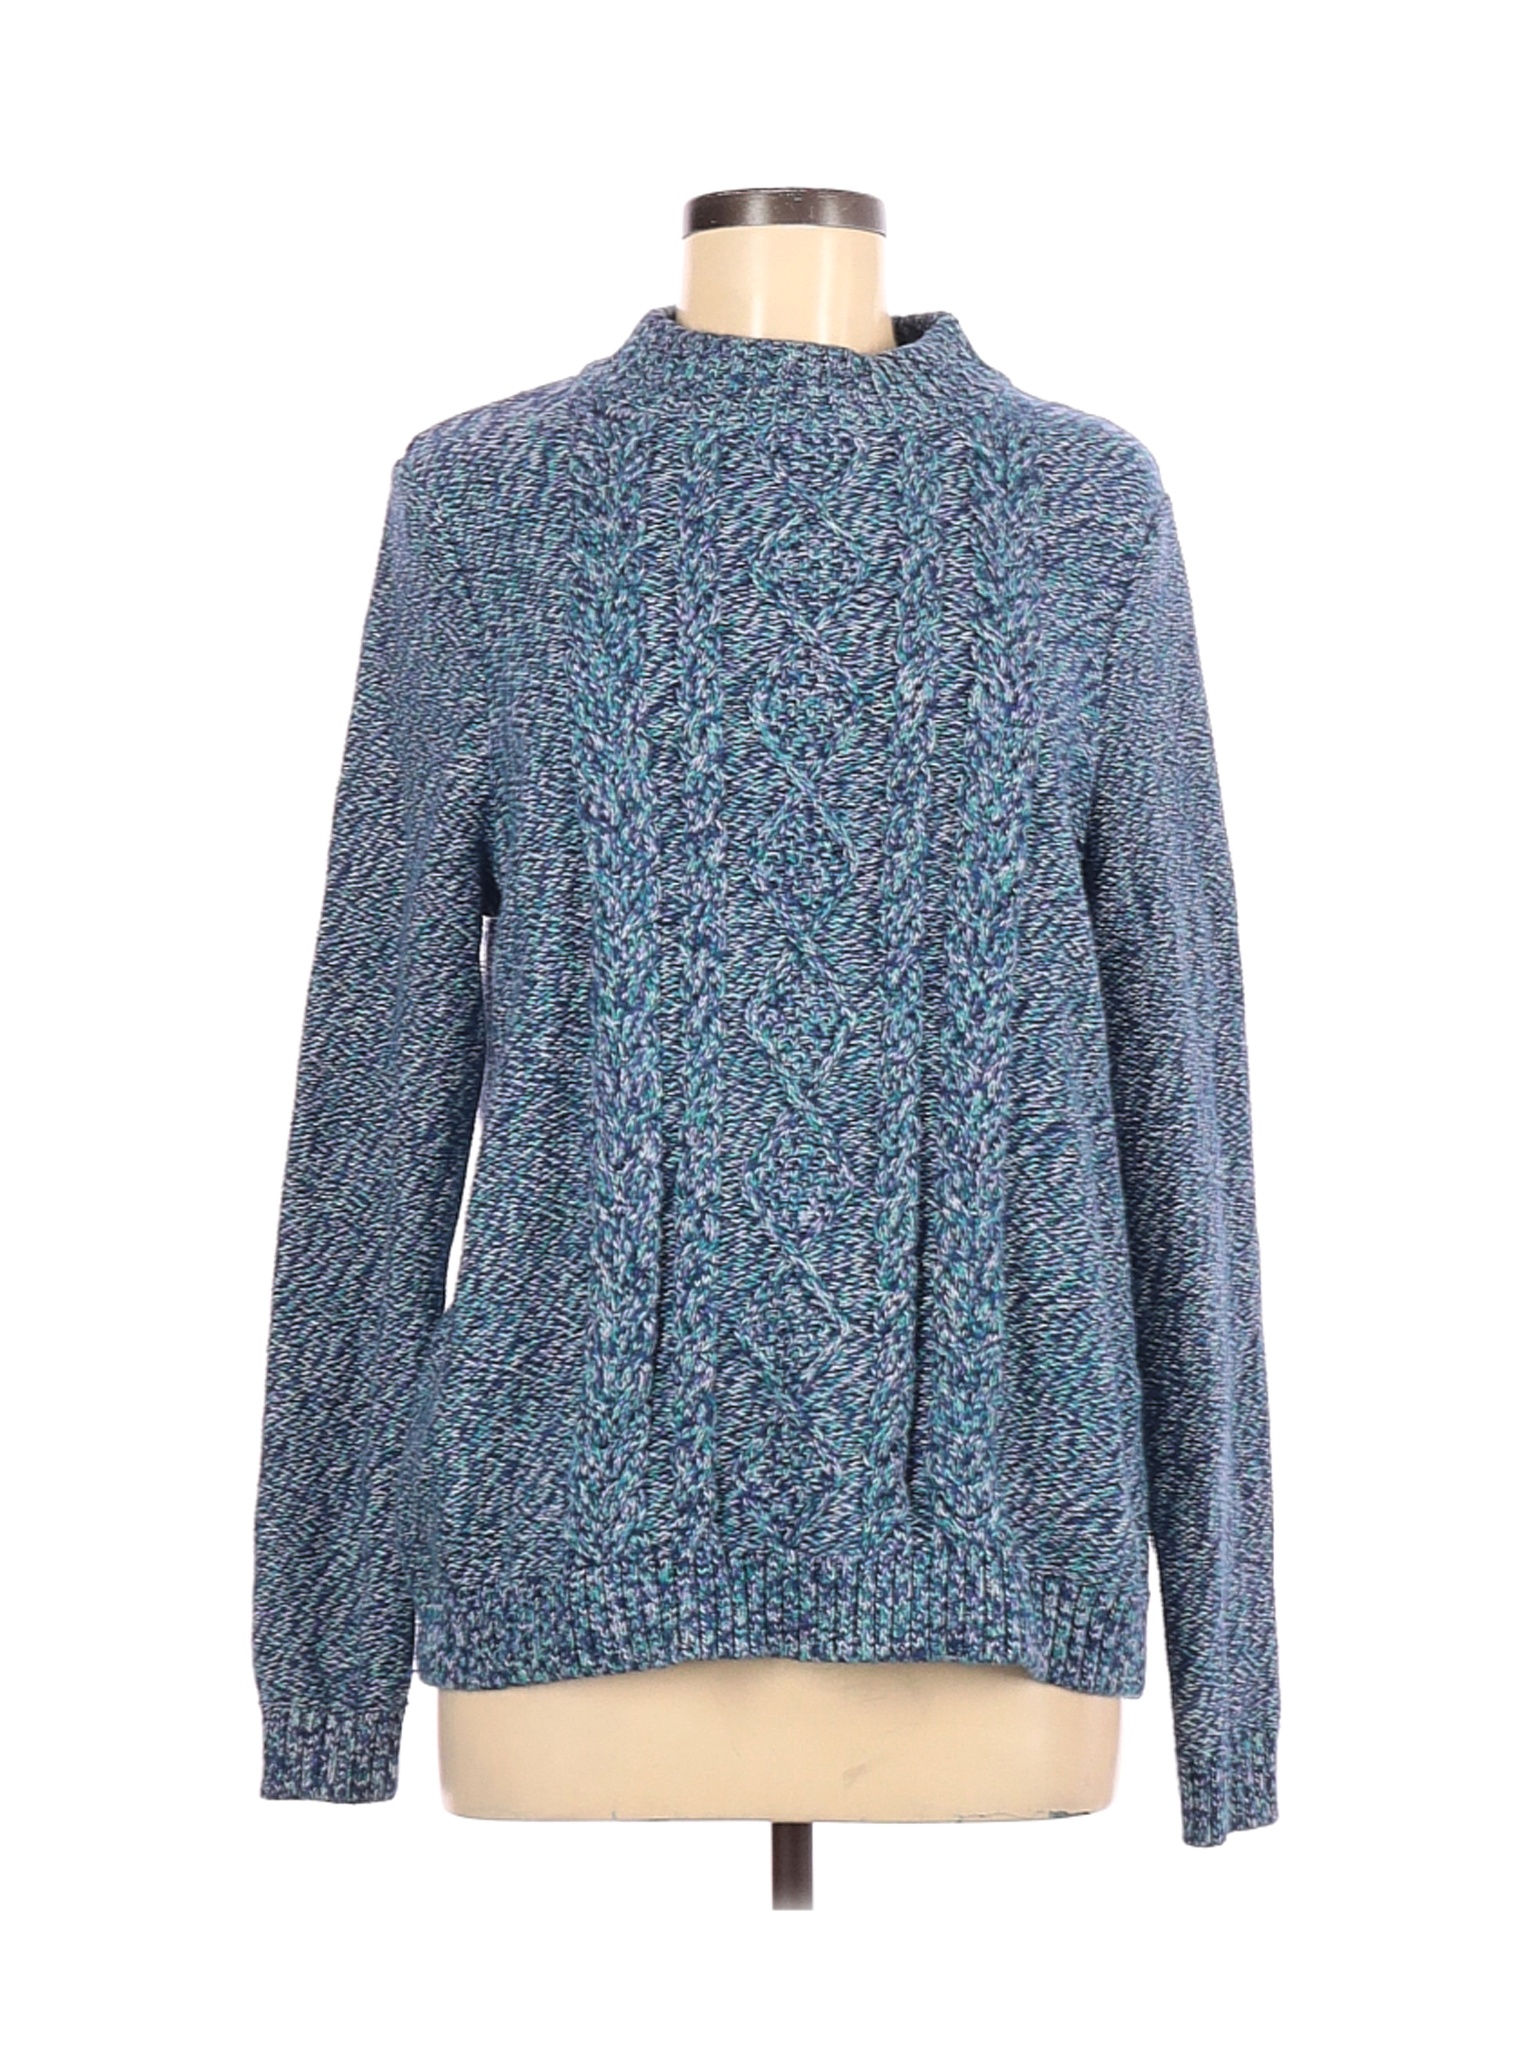 Lands' End Women Blue Turtleneck Sweater L | eBay